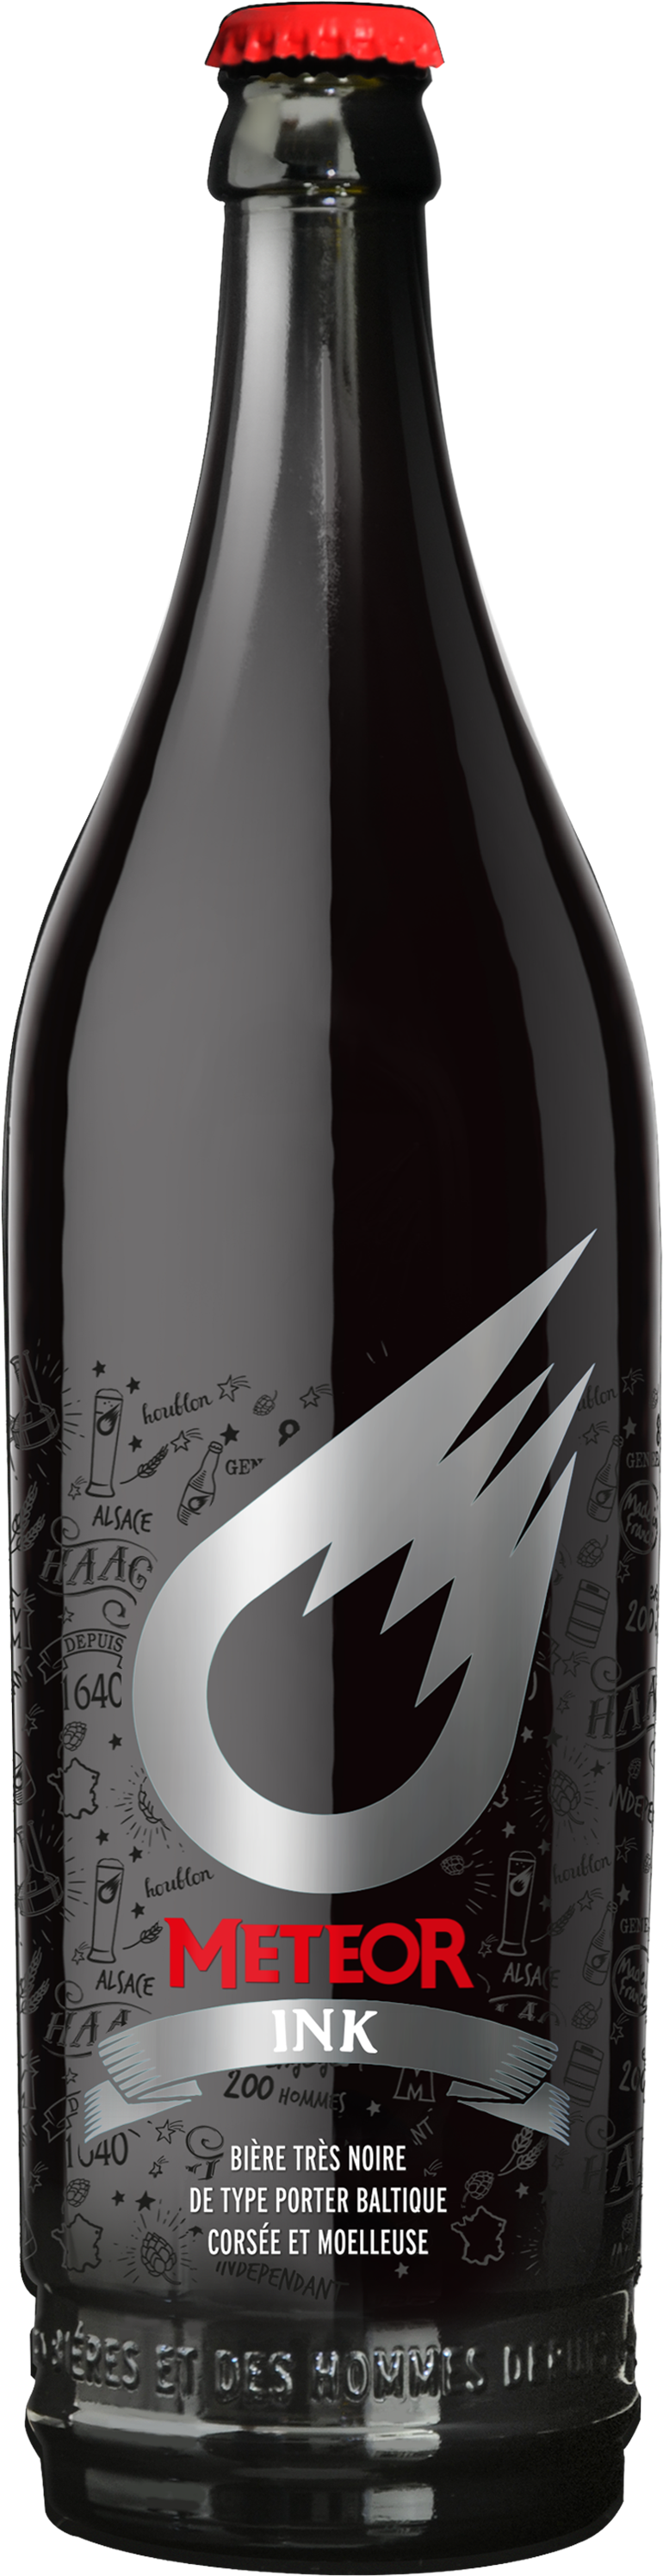 Meteor Ink Beer Bottle PNG